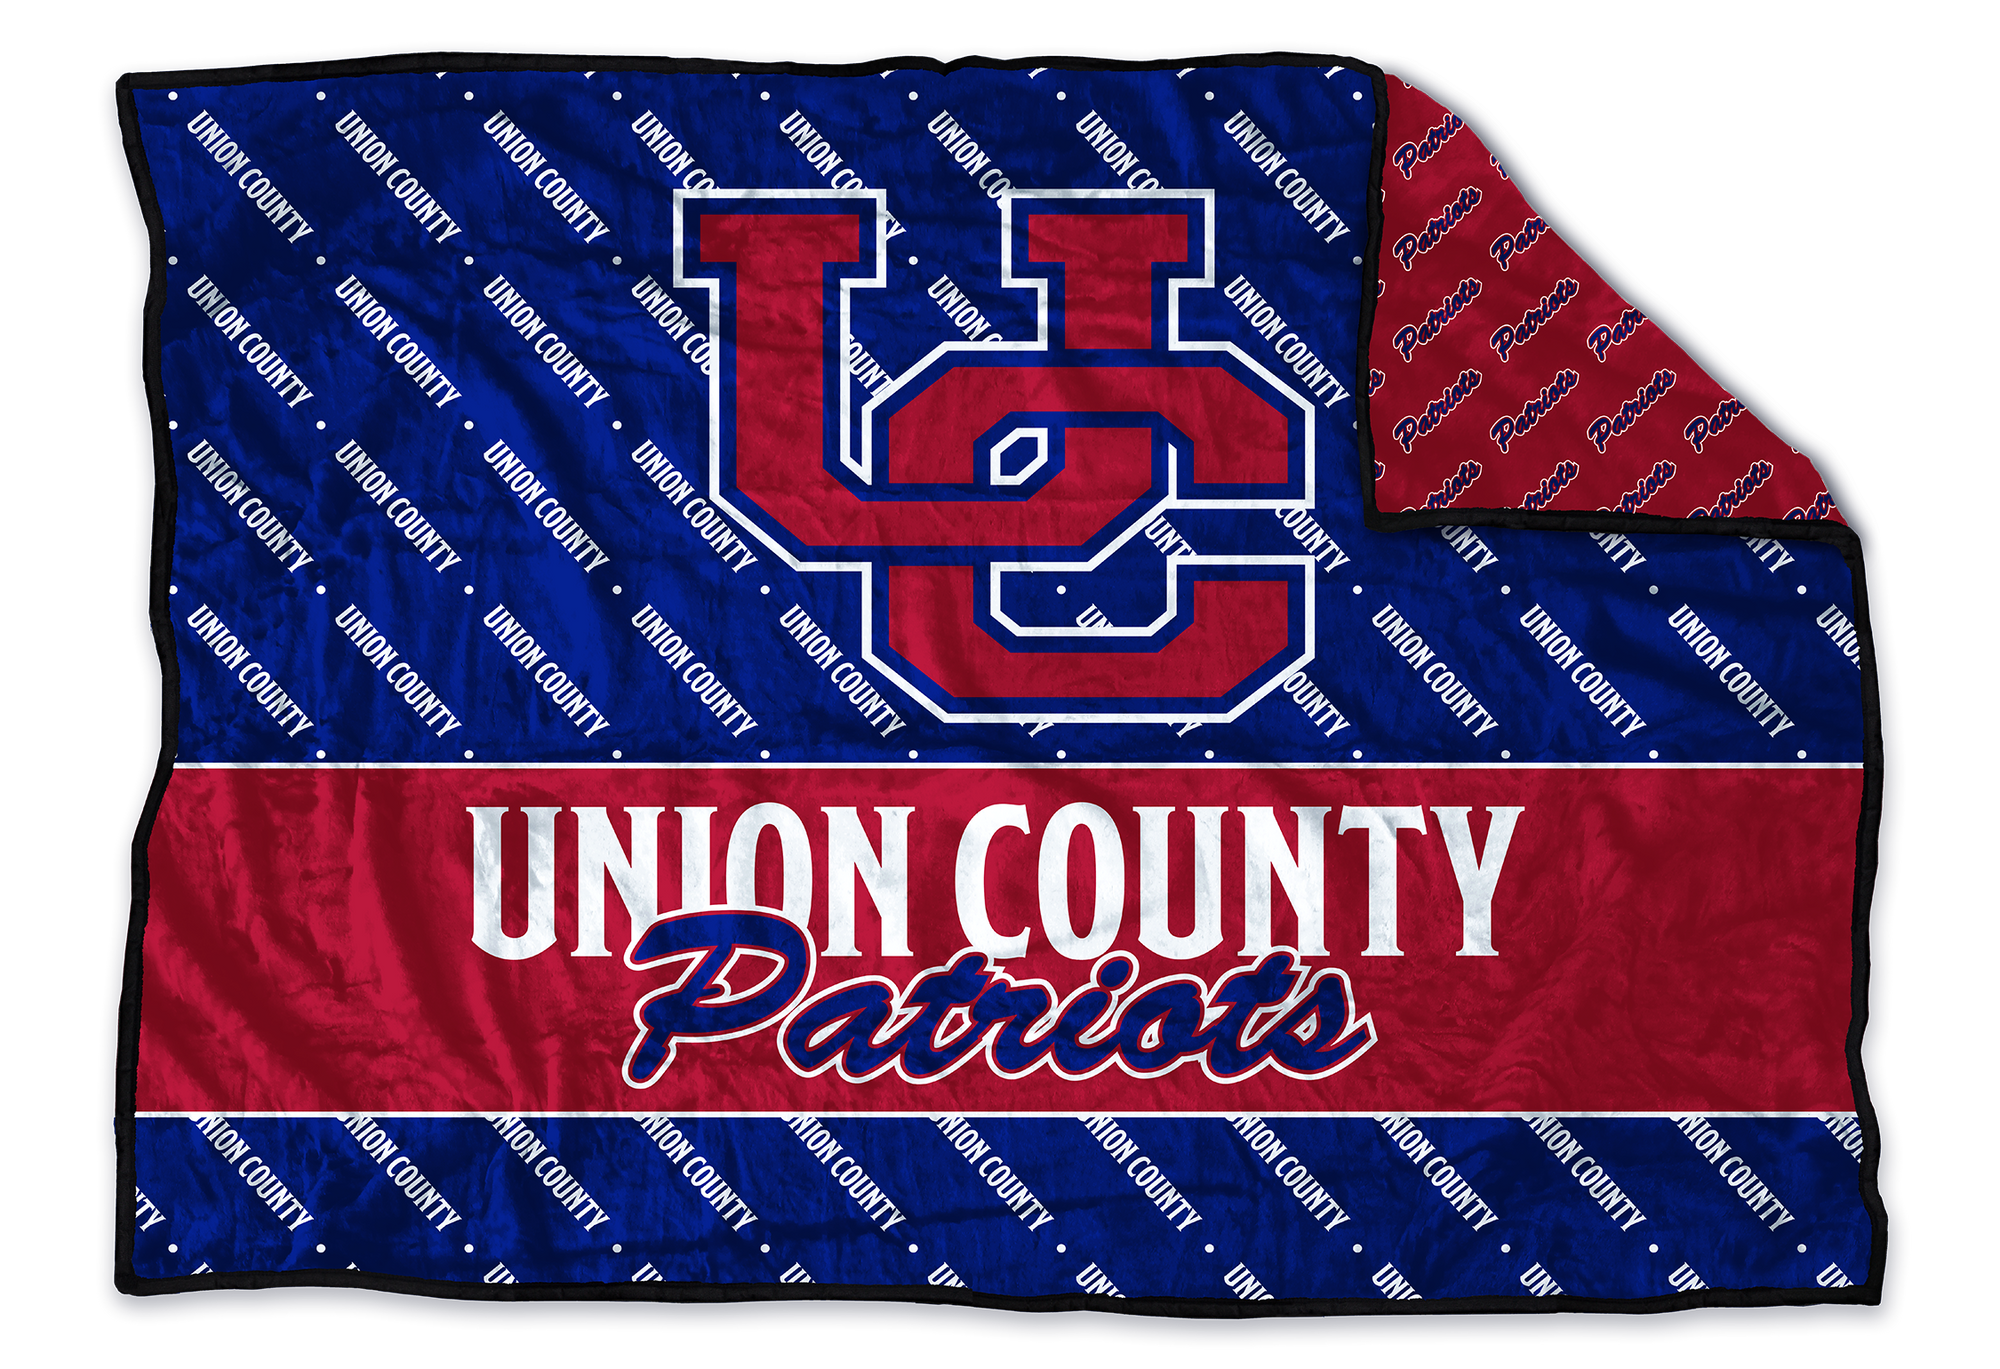 Union County Patriots